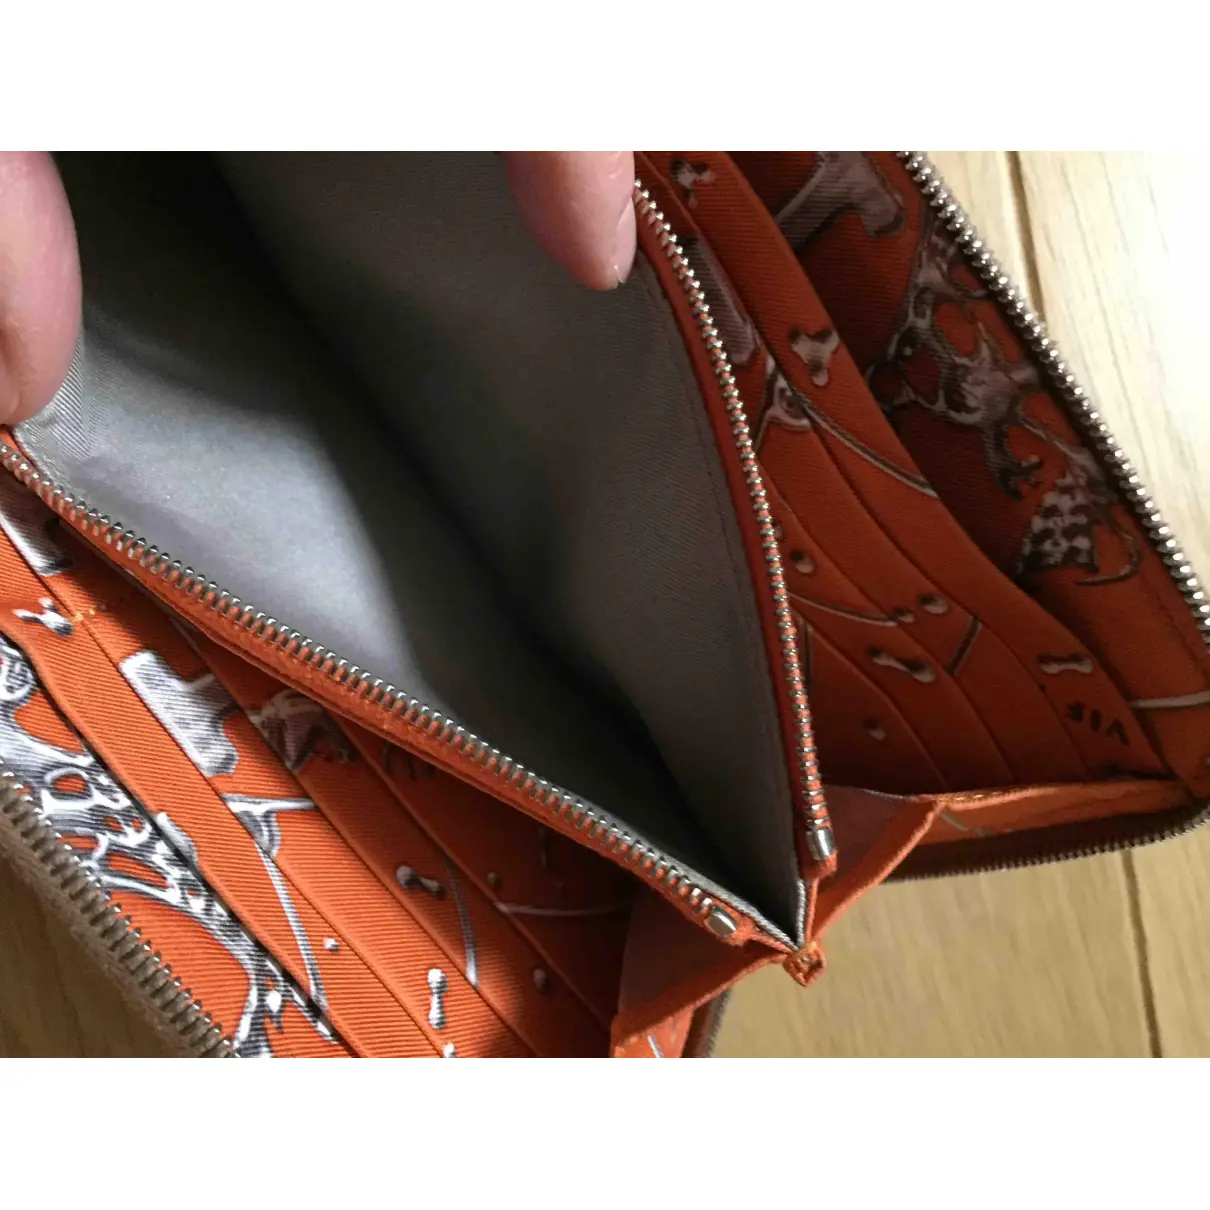 Buy Hermès Azap leather wallet online